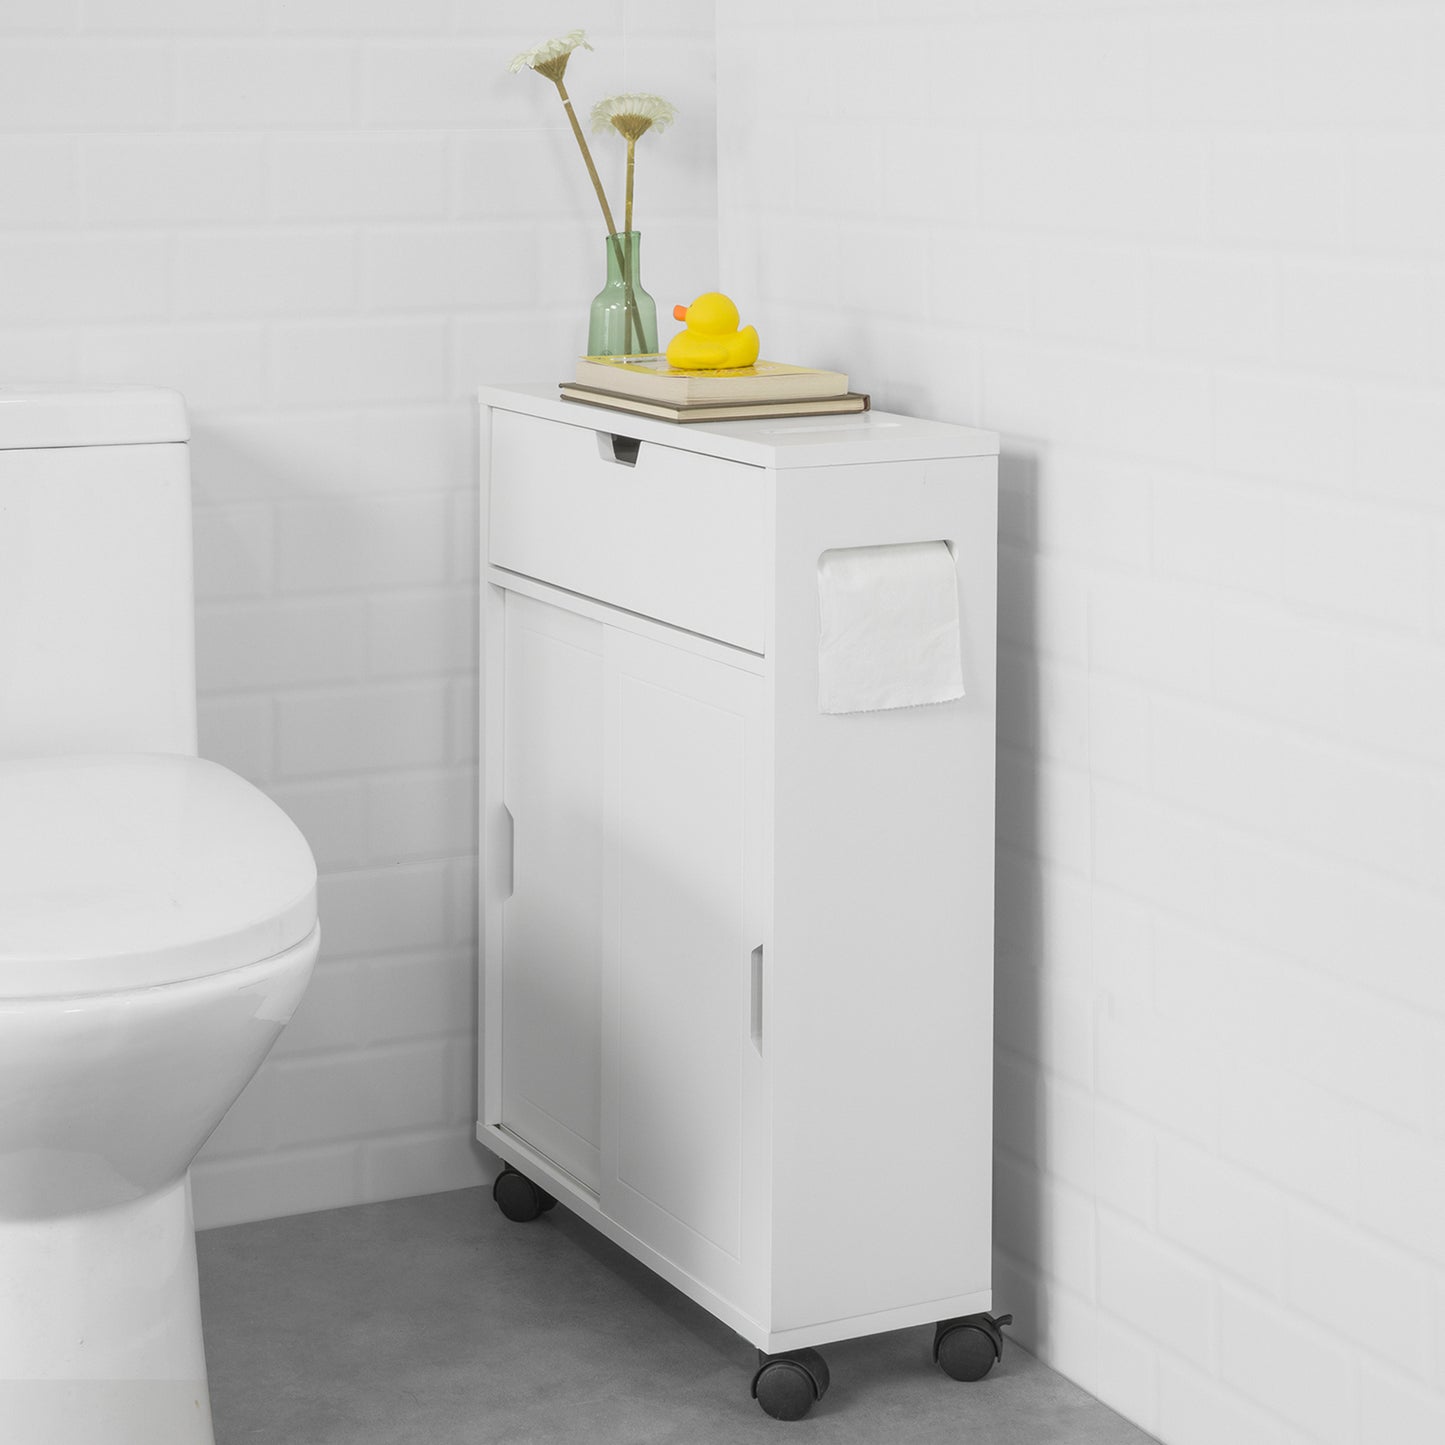 SoBuy White Toilet Paper Roll Holder, Bathroom Cabinet Storage Shelf on Wheels